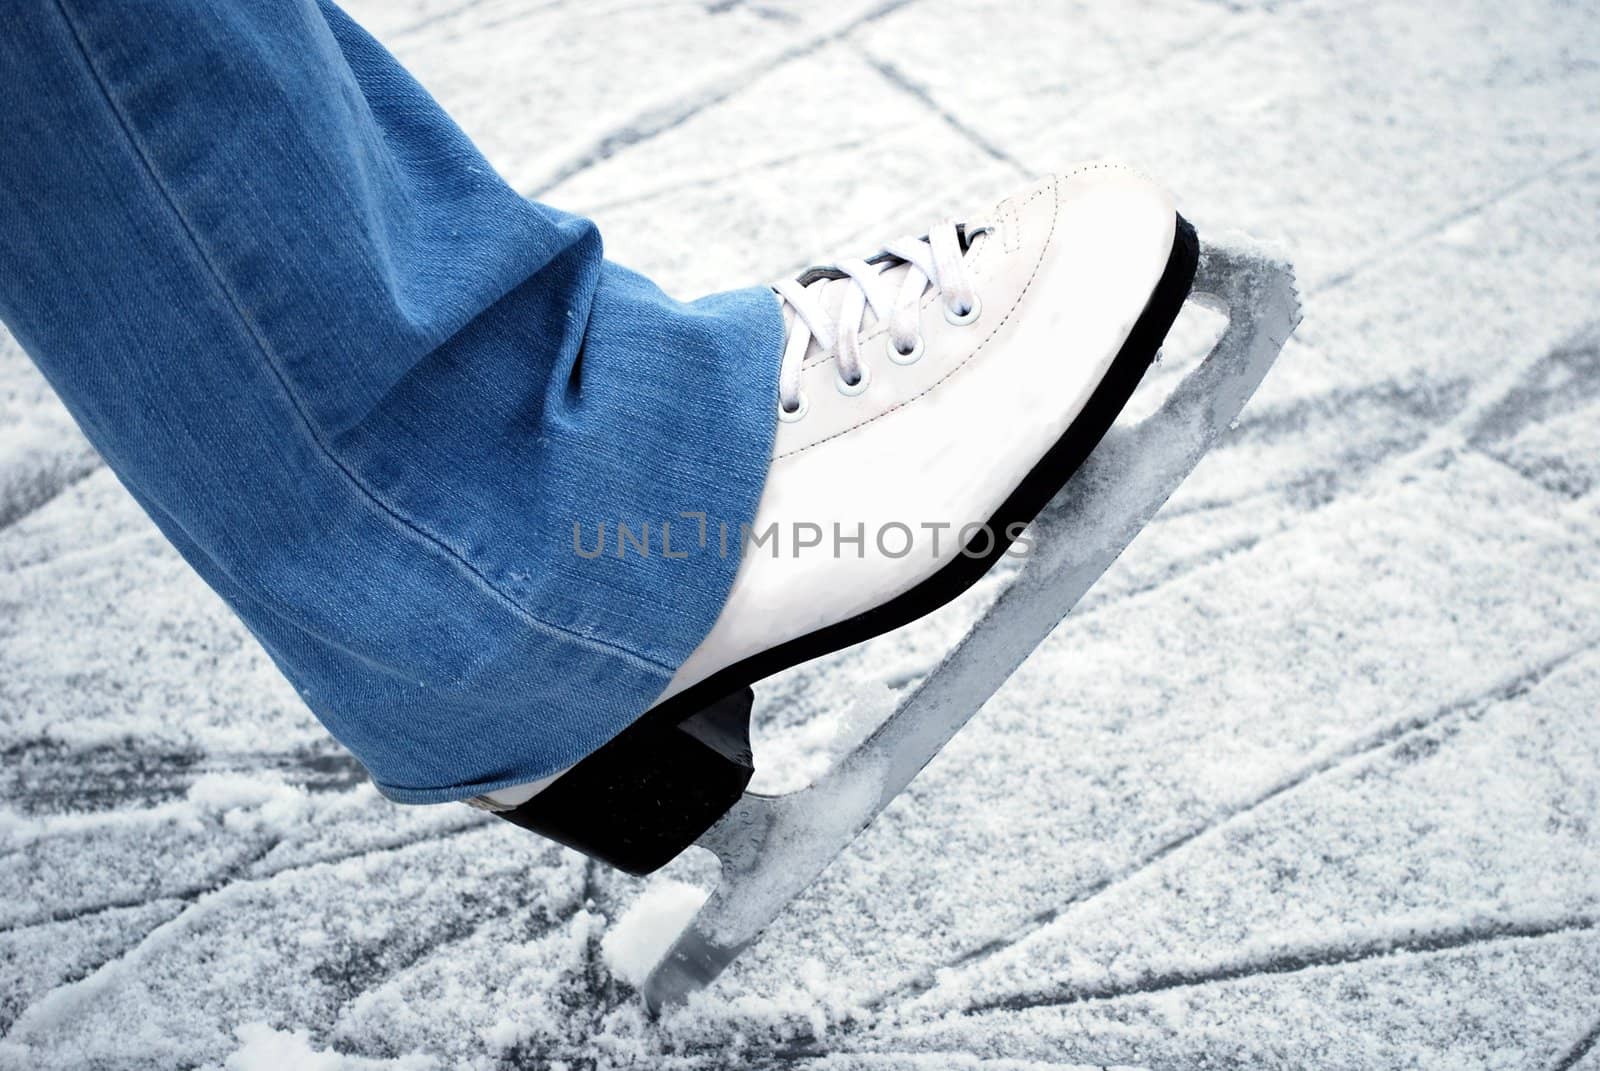 skate on ice by svtrotof